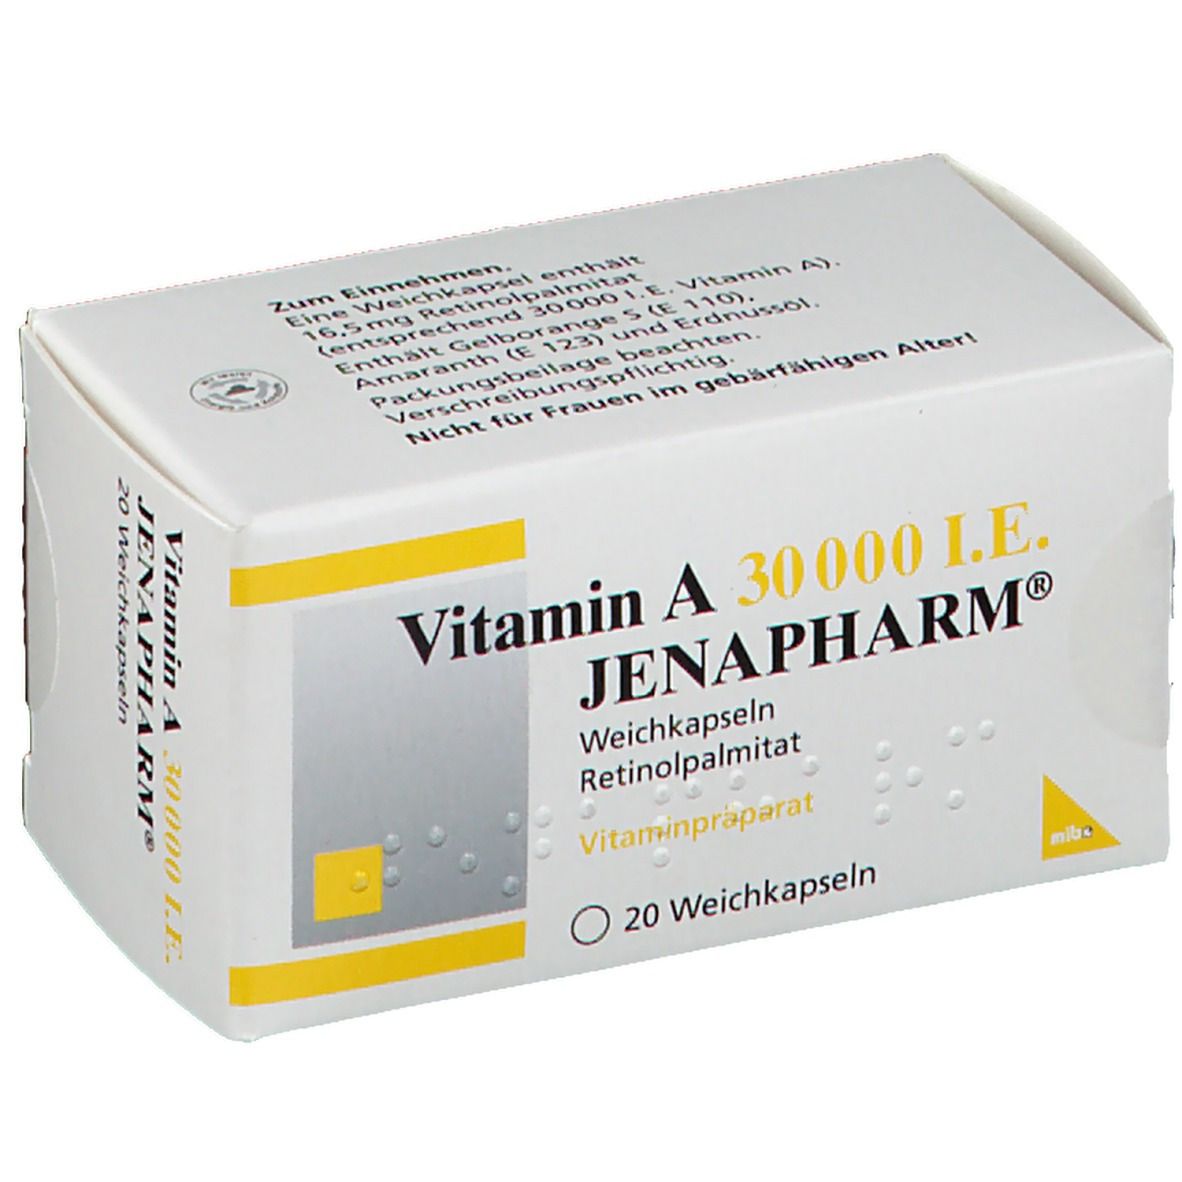 Vitamin A 30 000 I.e. Jenapharm Kapseln